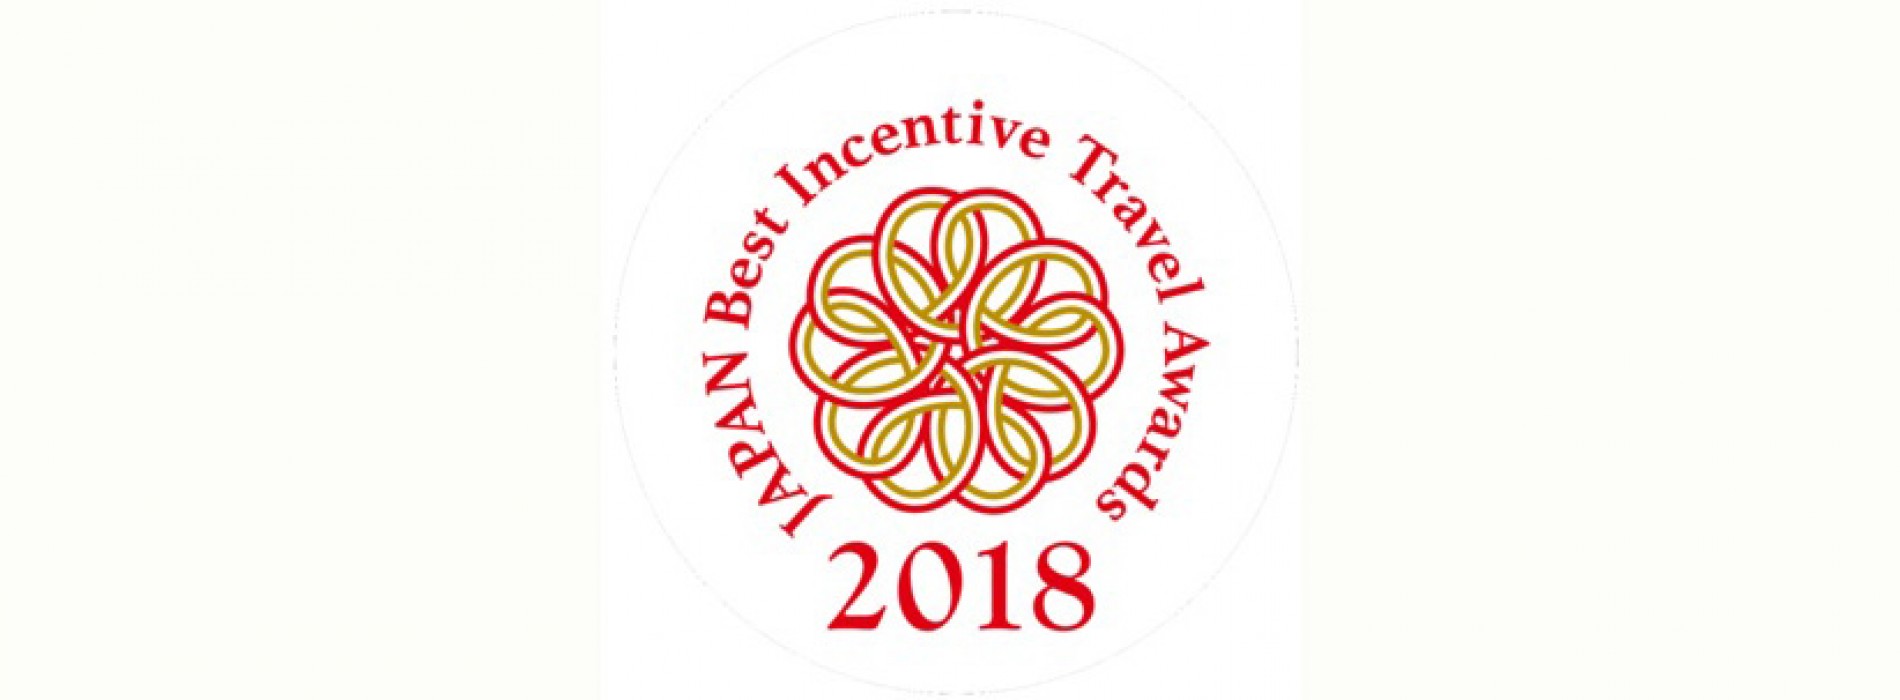 Japan Best Incentive Travel Awards 2018 announces winners